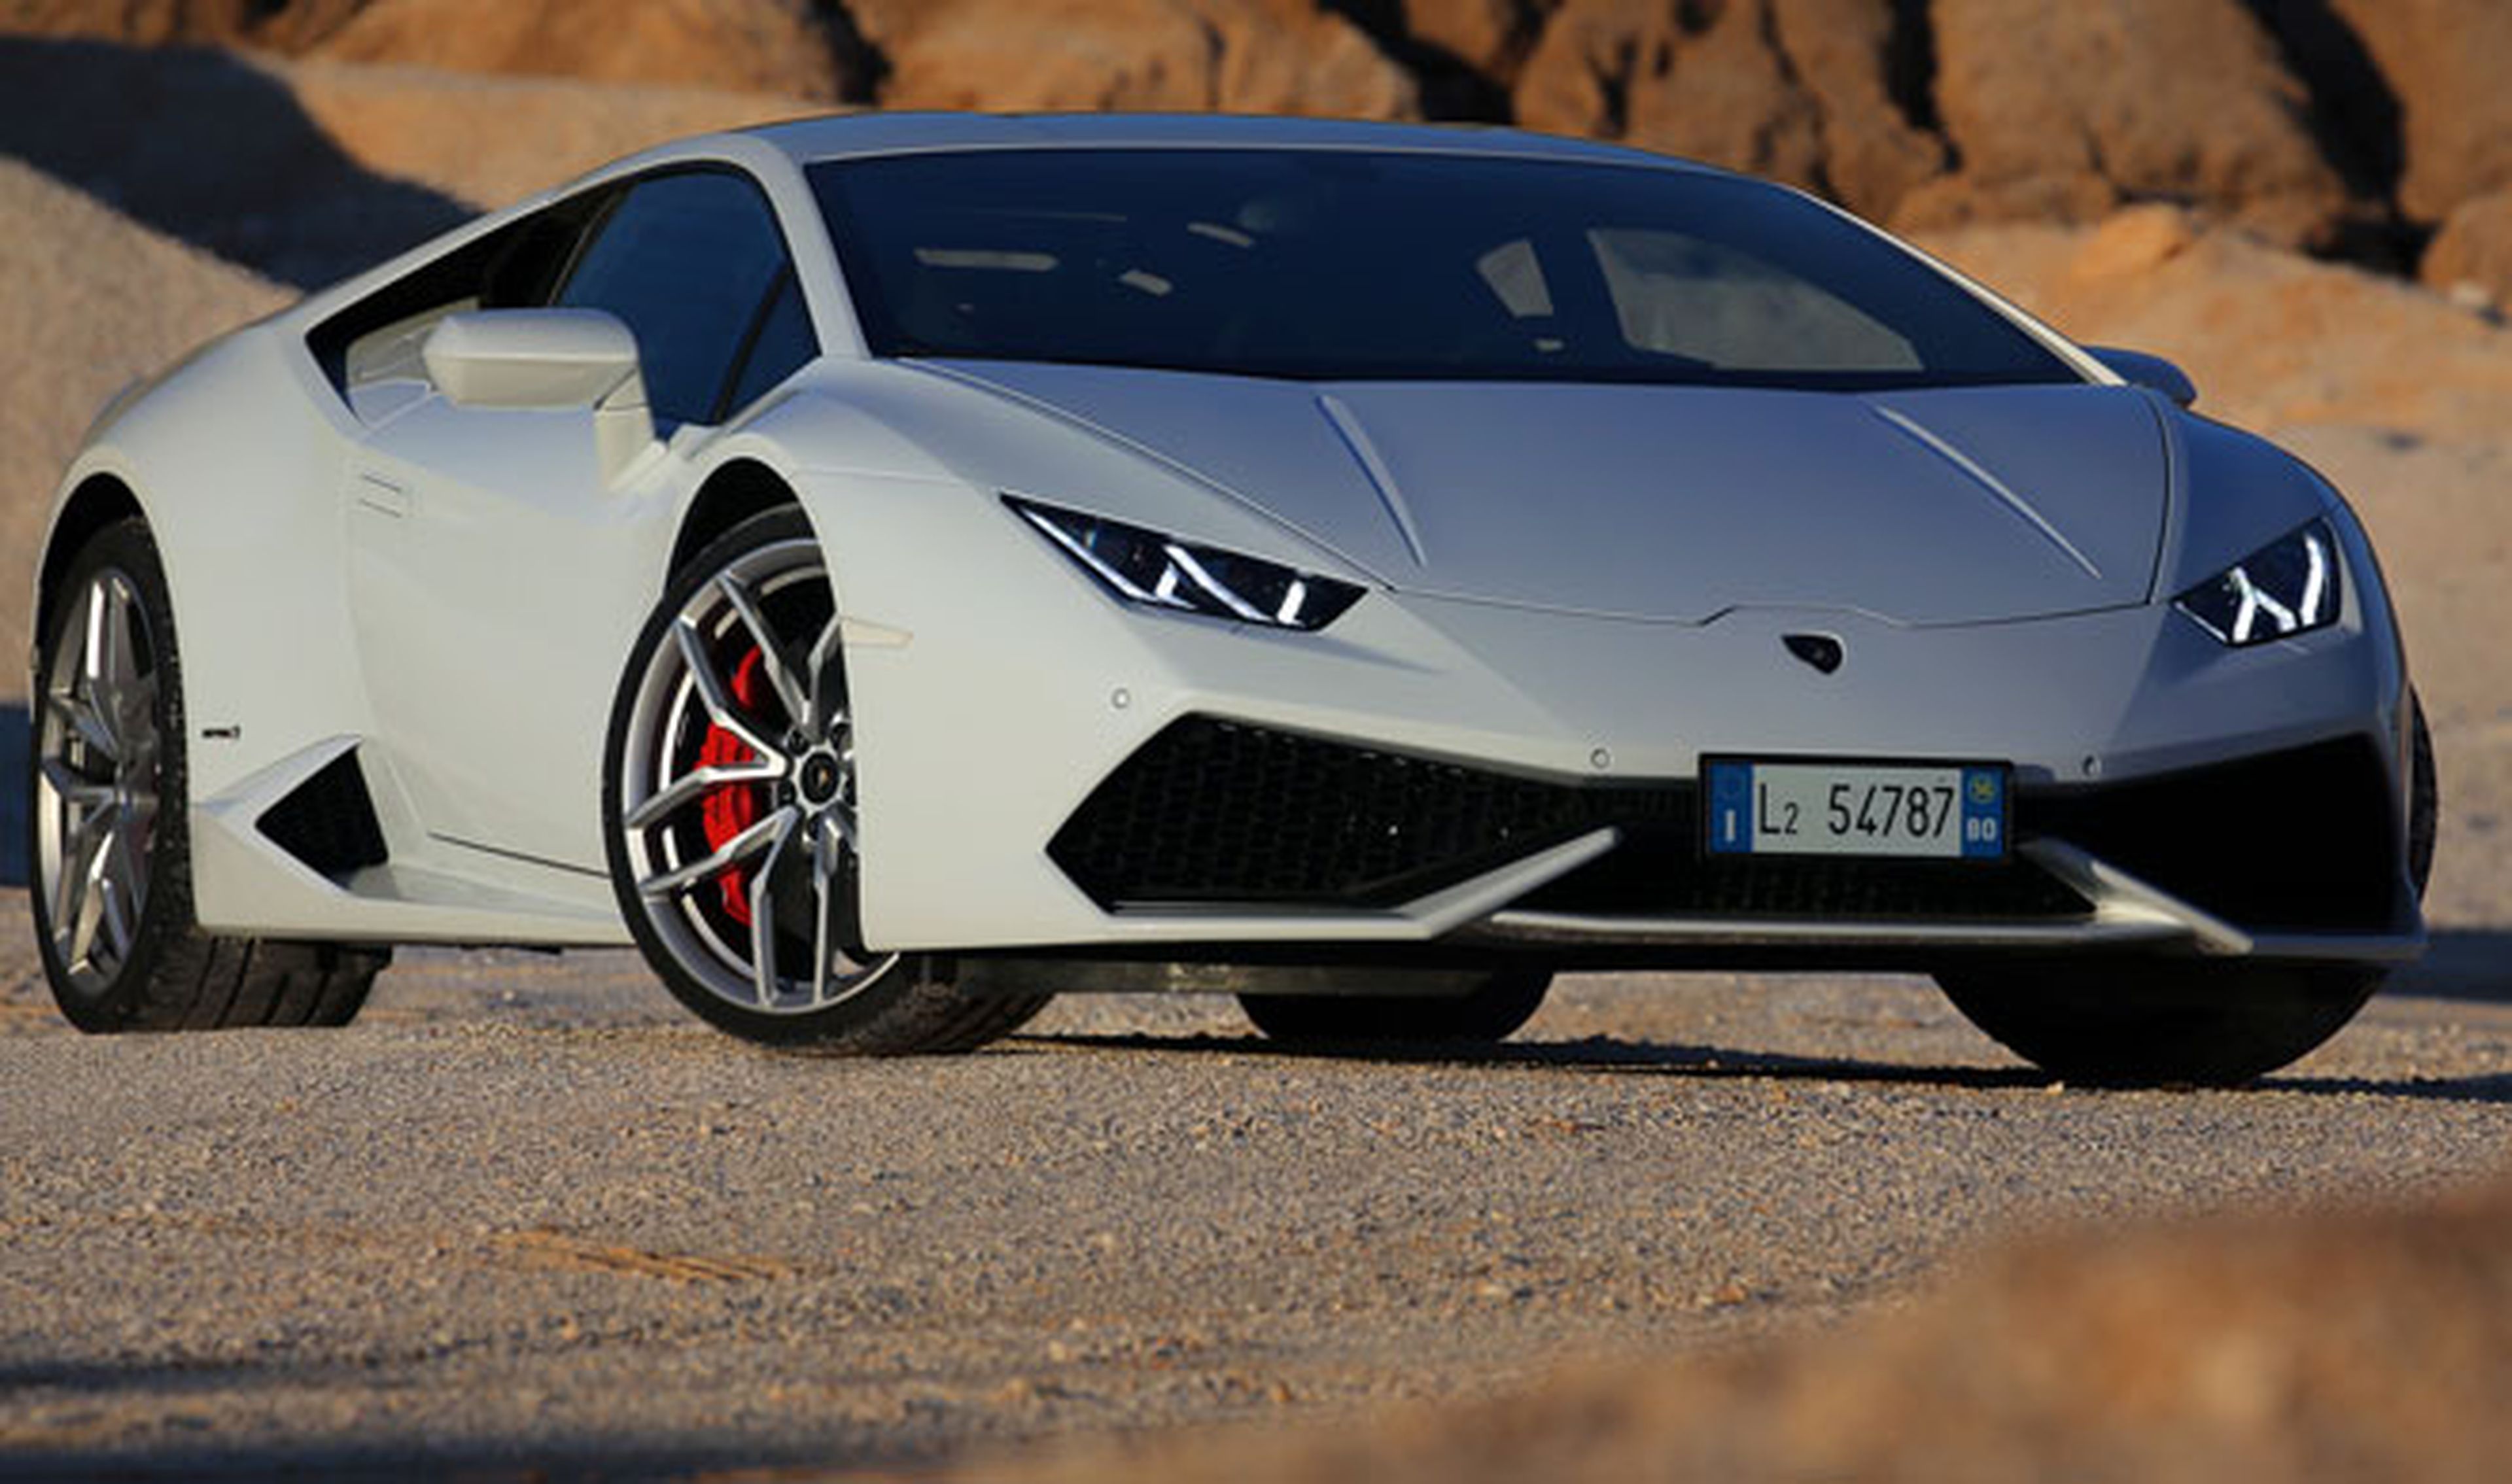 Desvelamos el nombre secreto del próximo Lamborghini